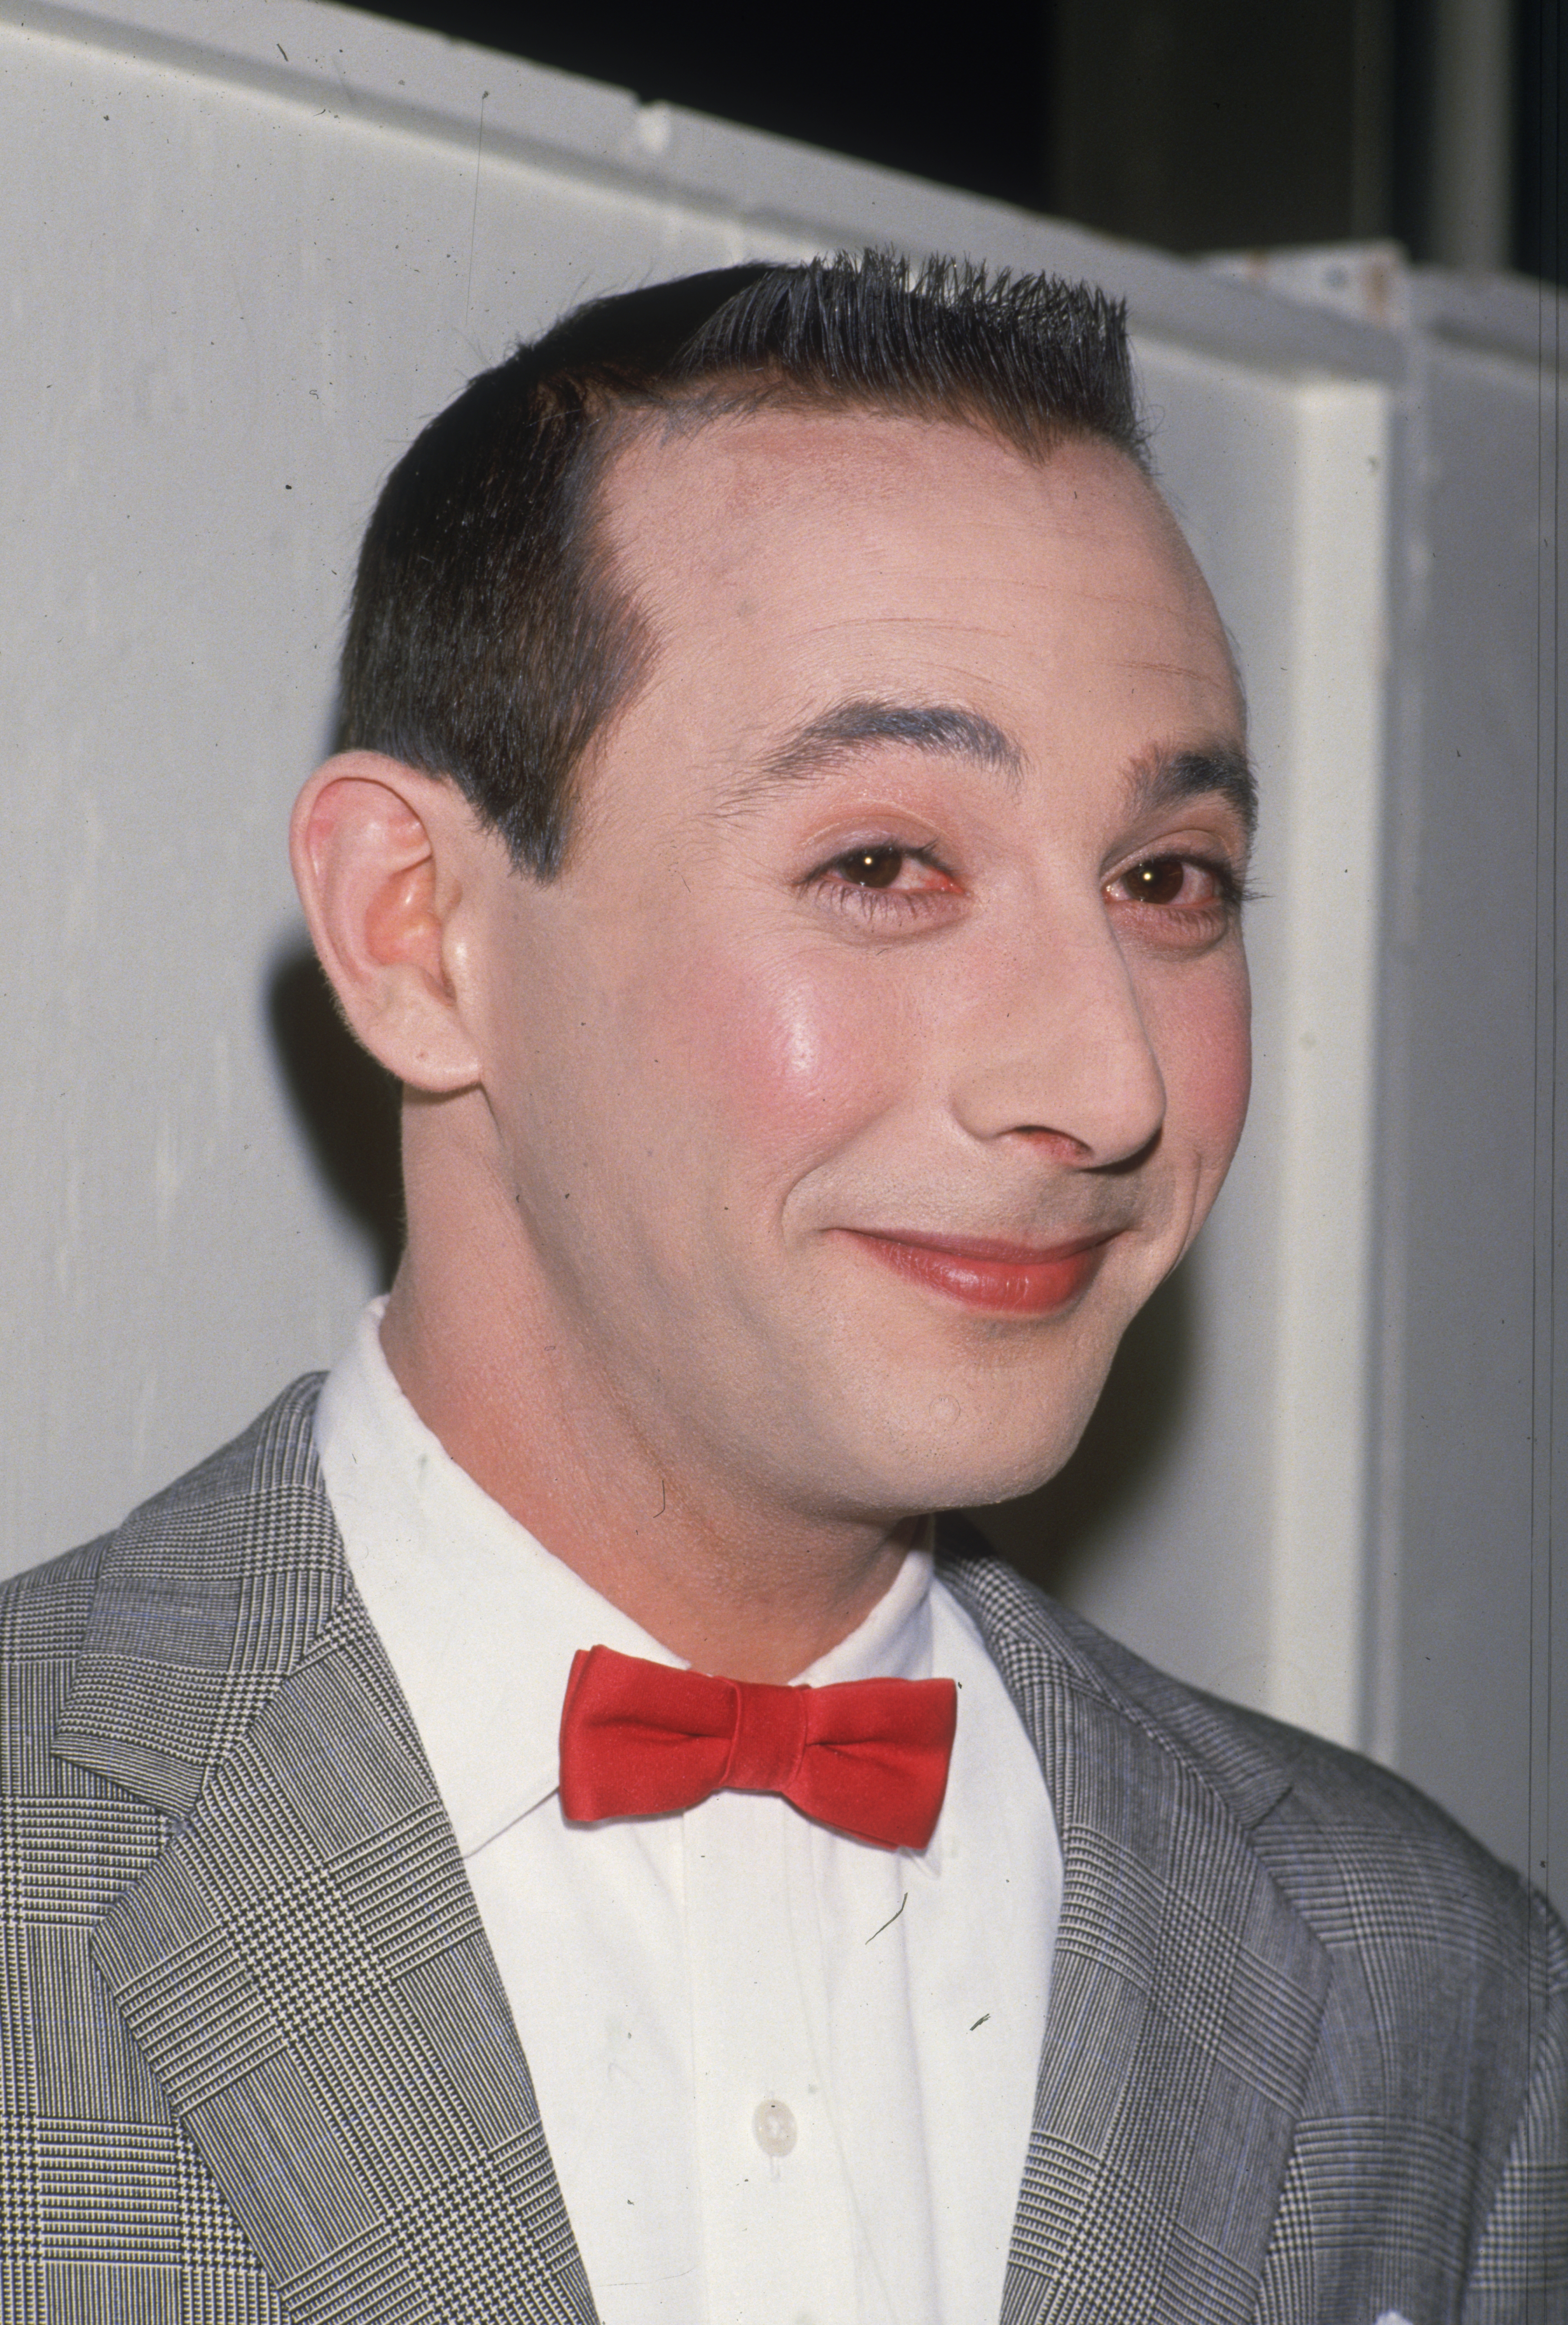 Paul Reubens als Pee-Wee Herman im Jahr 1988 | Quelle: Getty Images